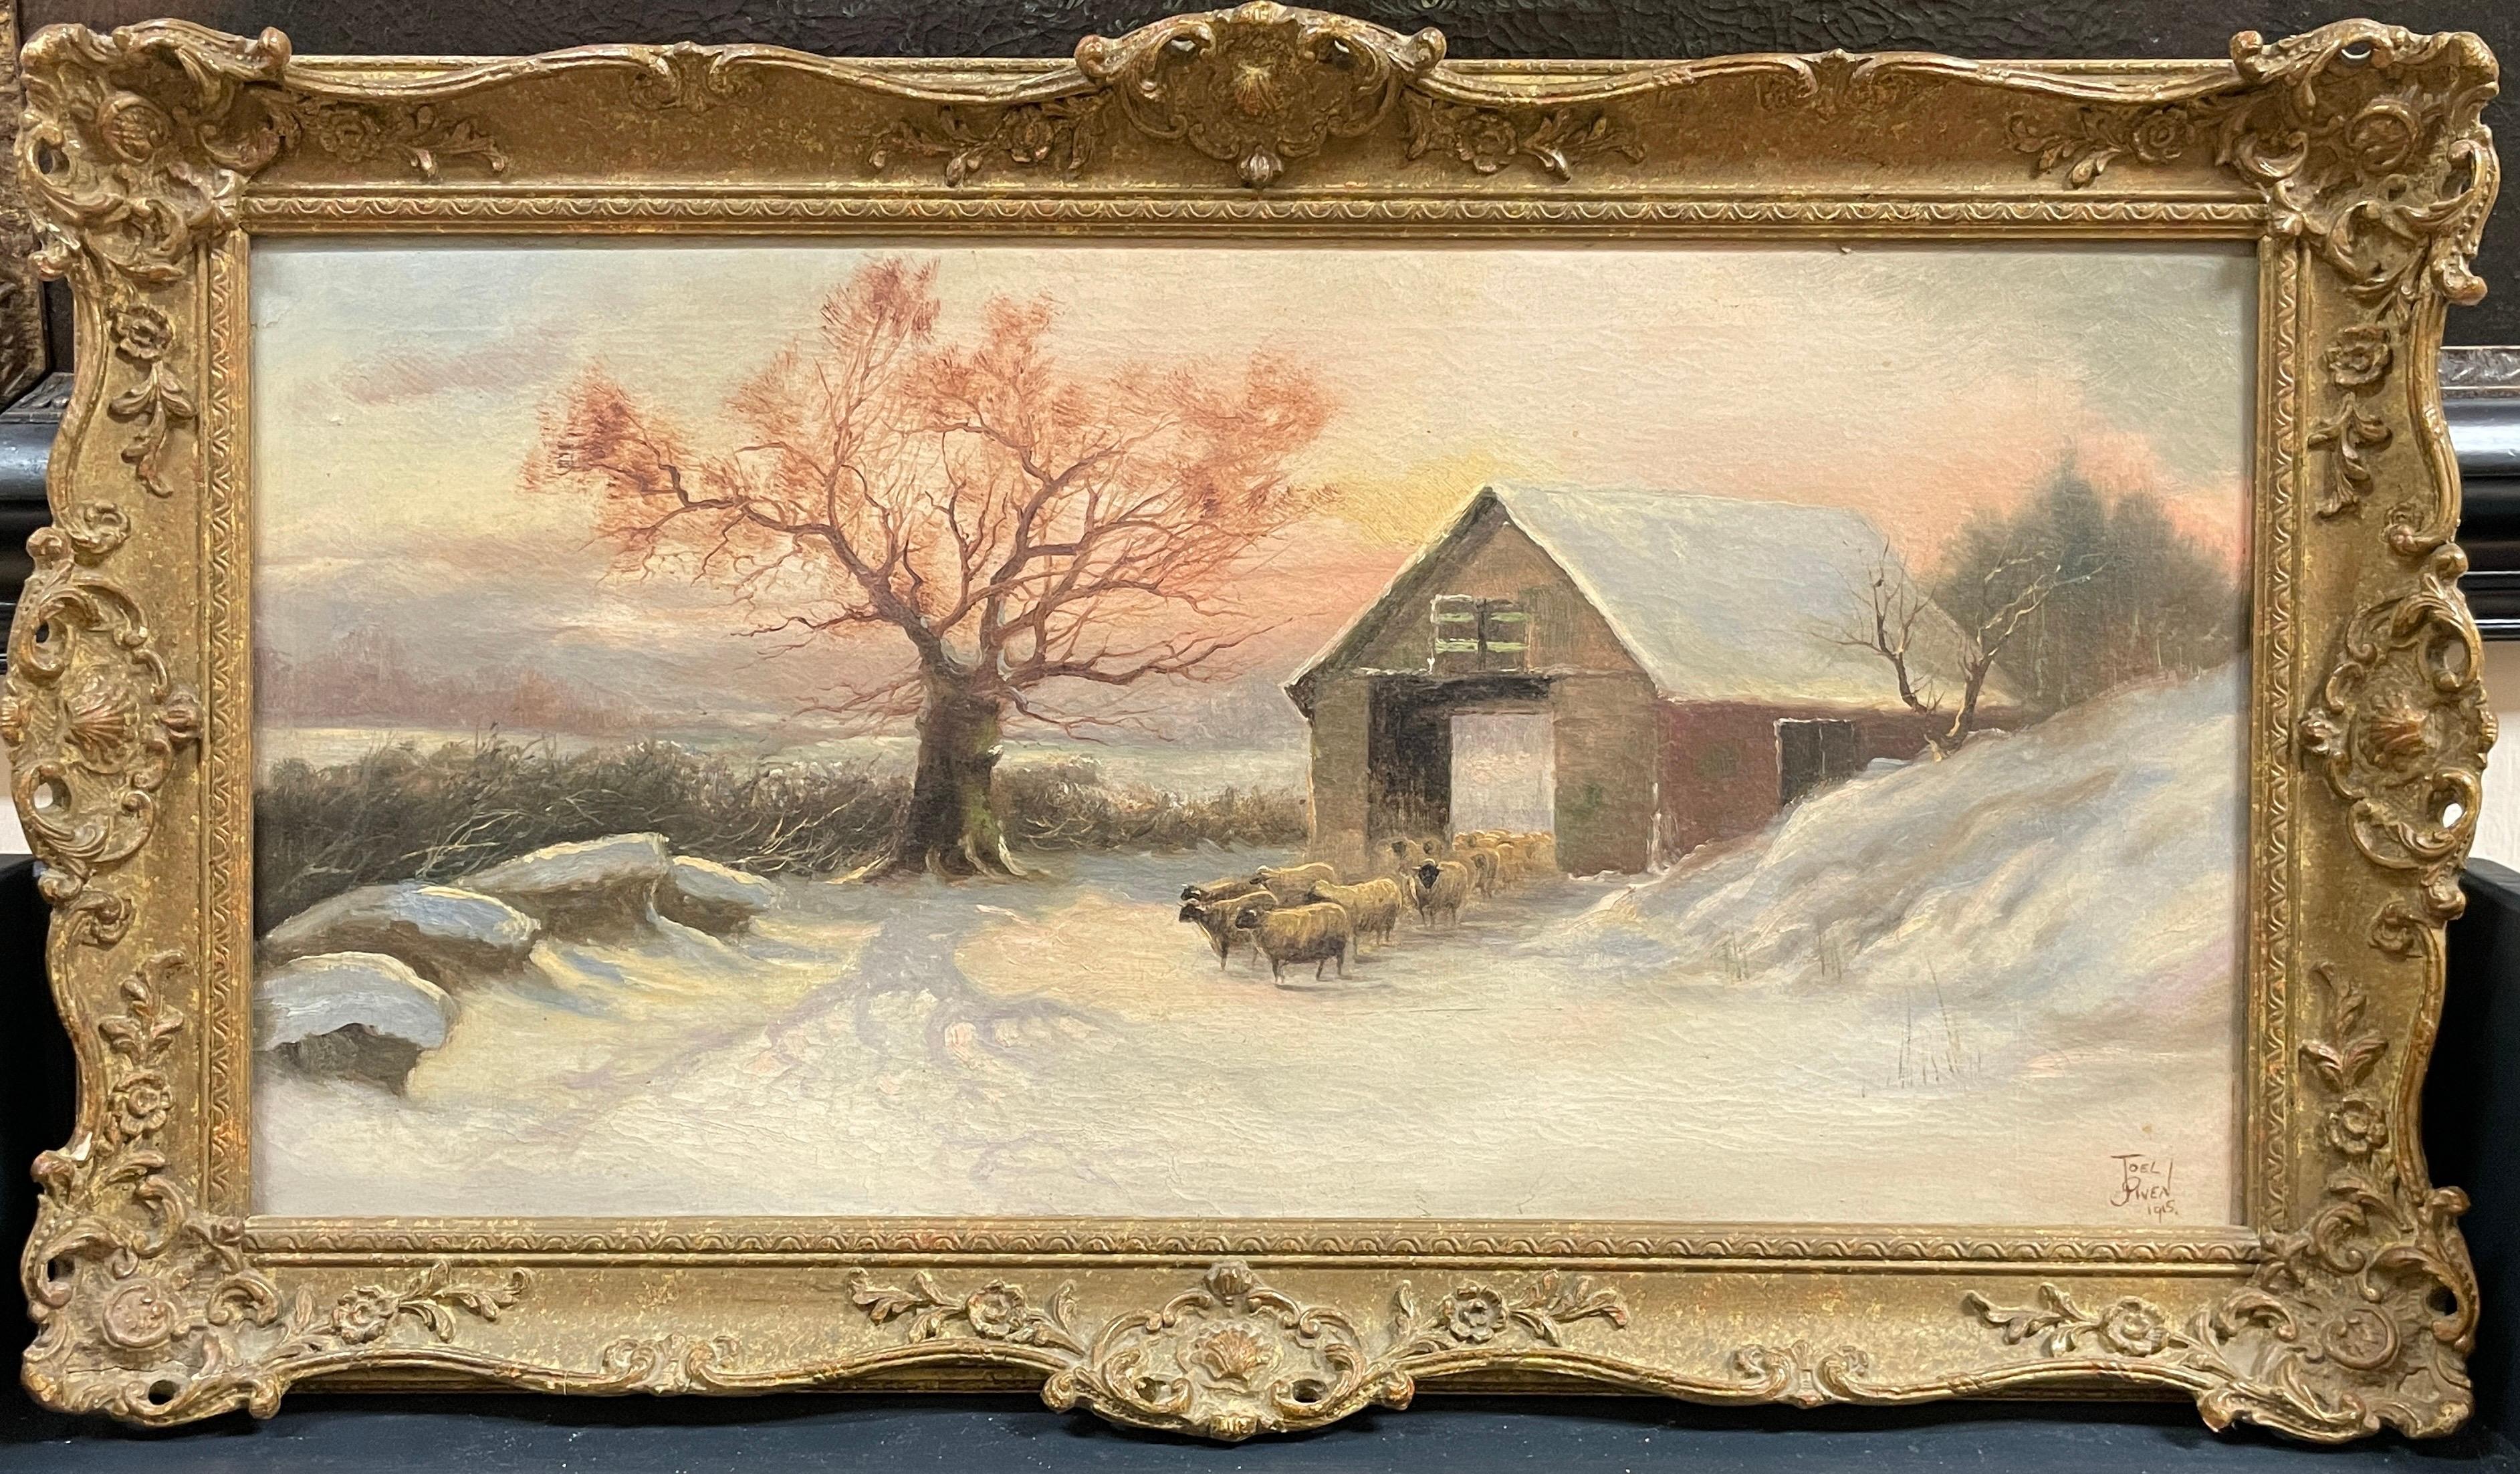 Joel Owen Animal Painting - Sheep in Winter Snow Sunrise Farm Landscape Antique British Oil Painting, signed